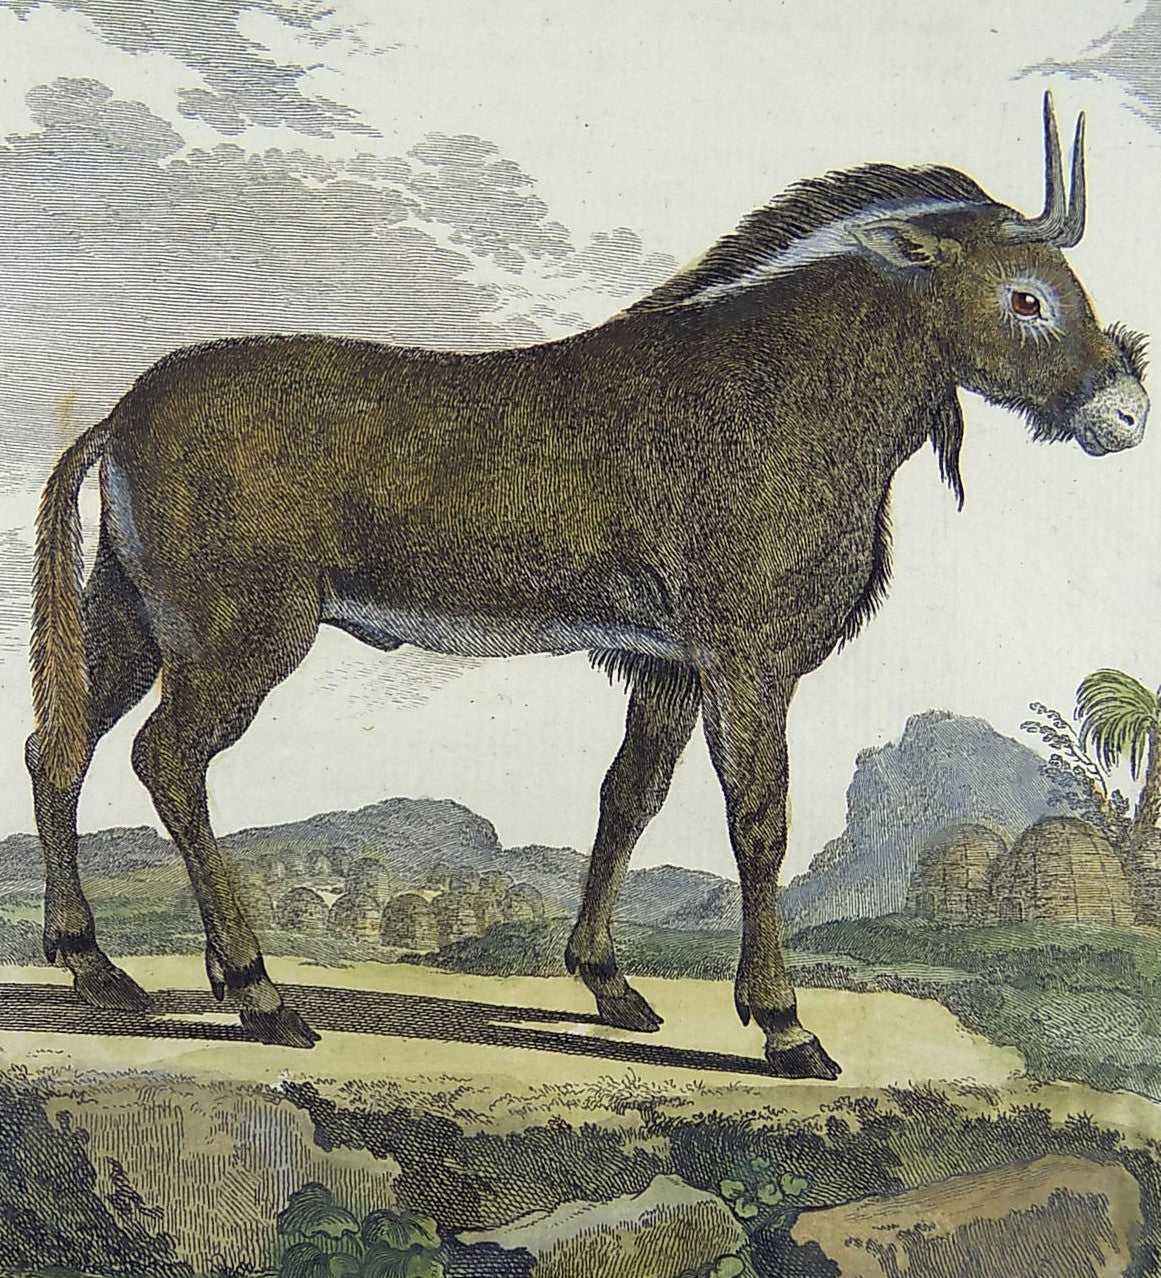 1766 De Seve - GNU - large QUARTO edition hand colored engraving - Mammal